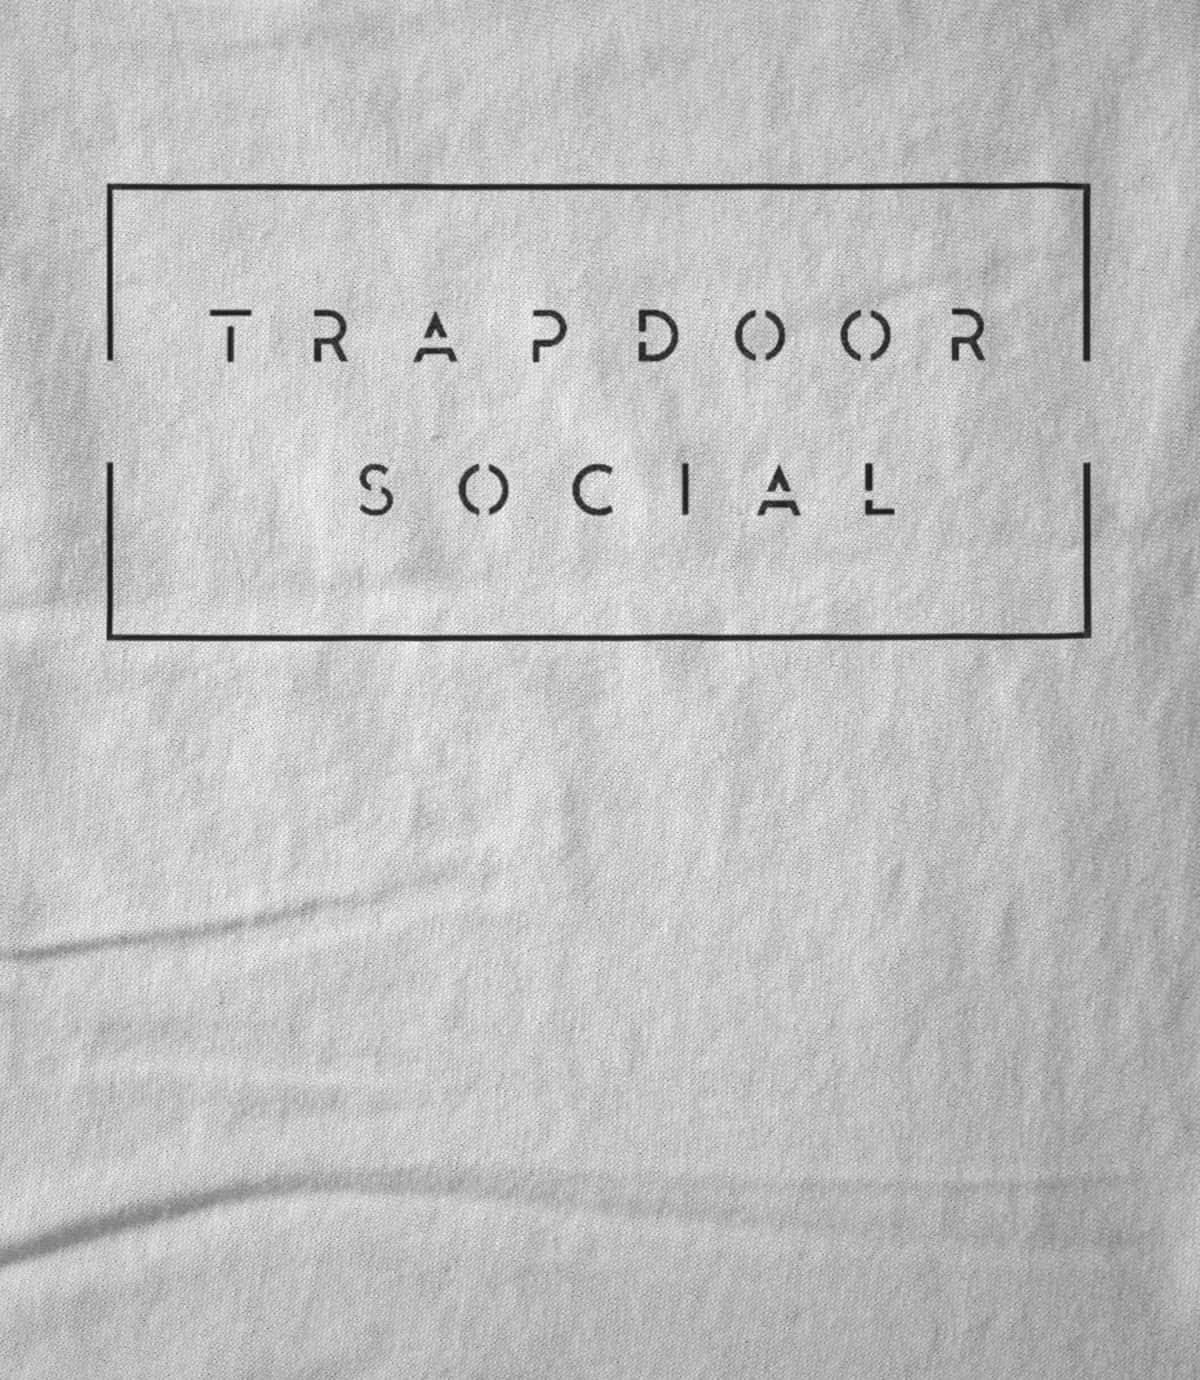 Trapdoor social white band logo 1476398886